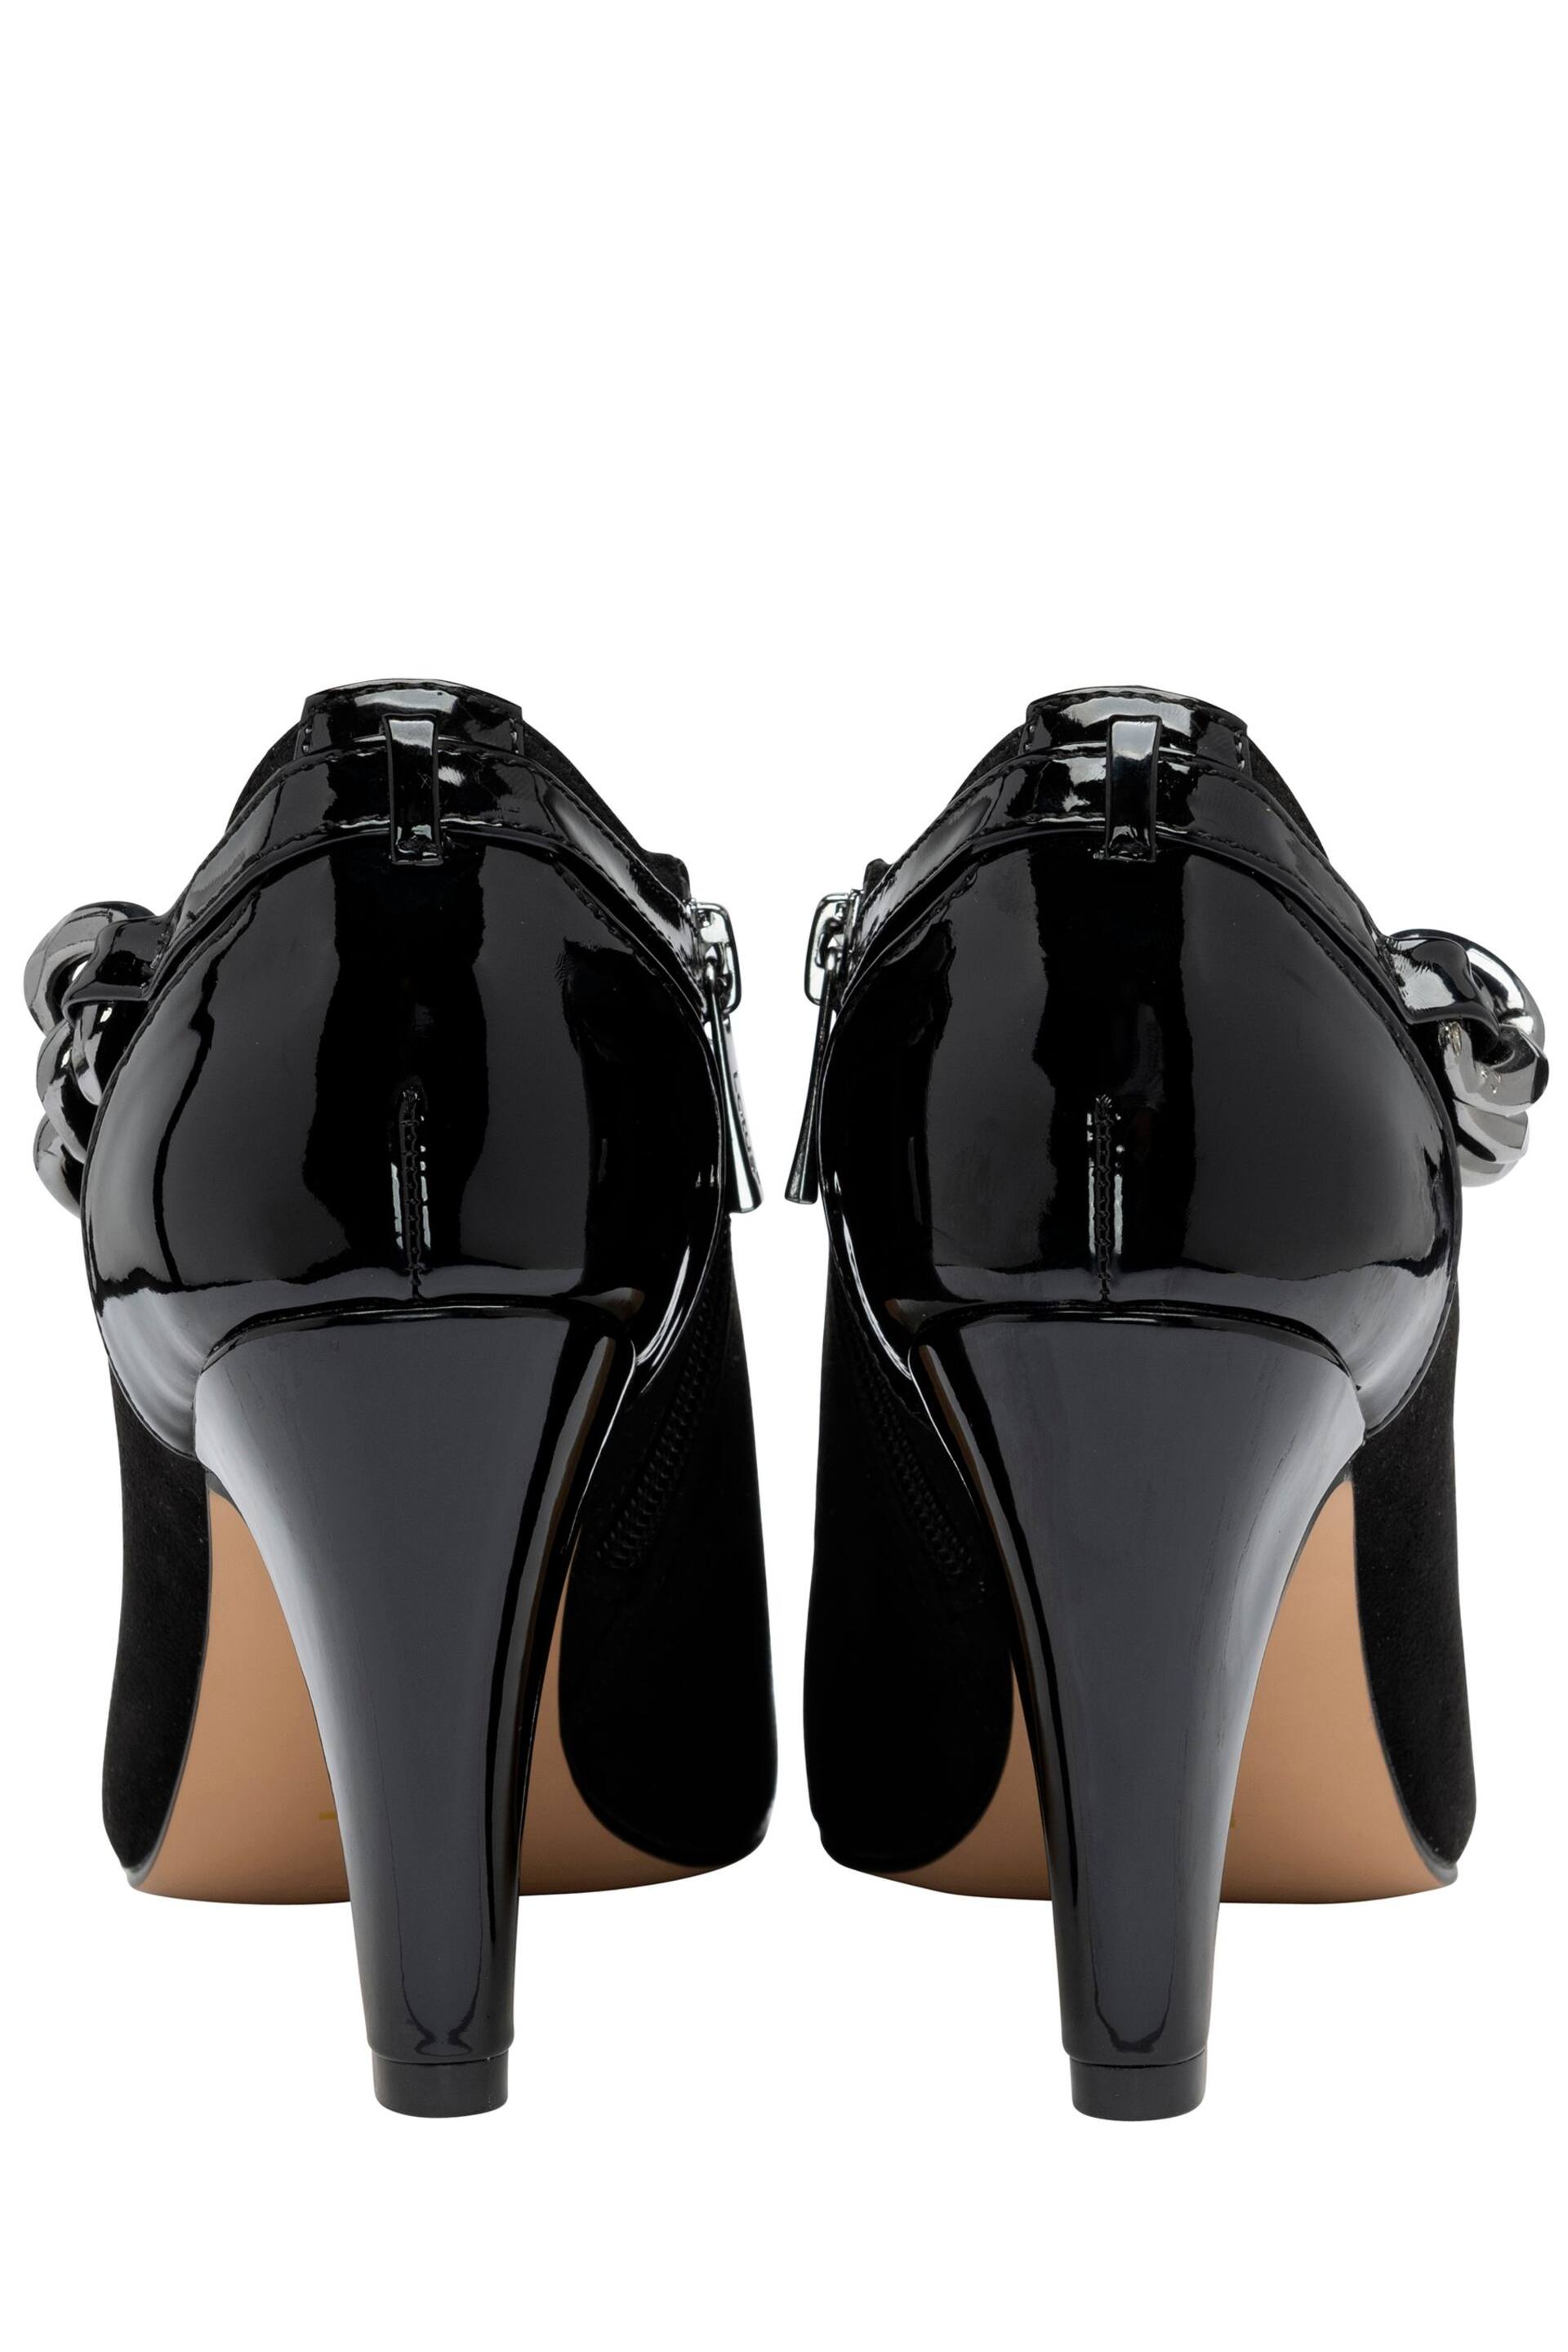 Lotus Black Heeled Shoe Boots - Image 3 of 4